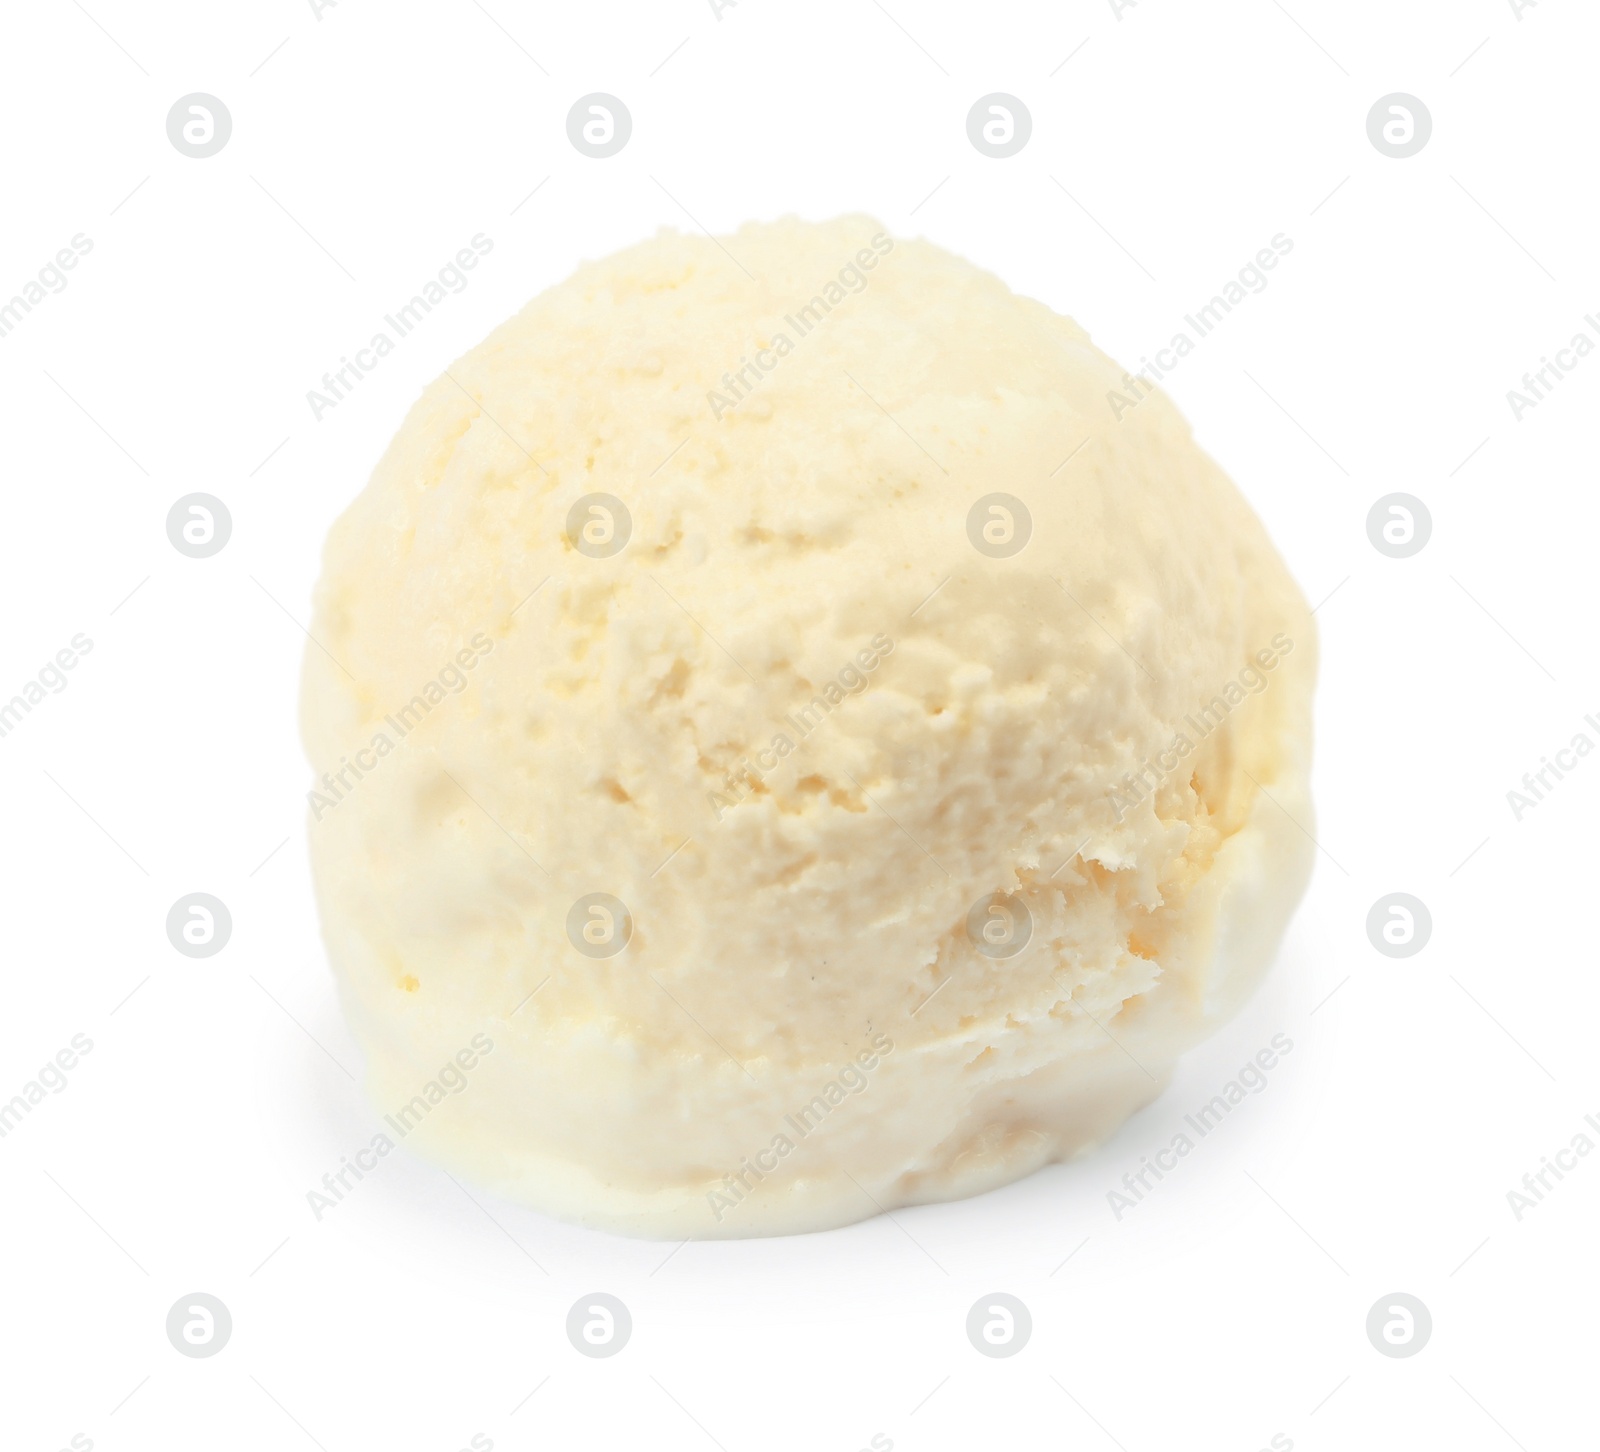 Photo of Delicious vanilla ice cream on white background